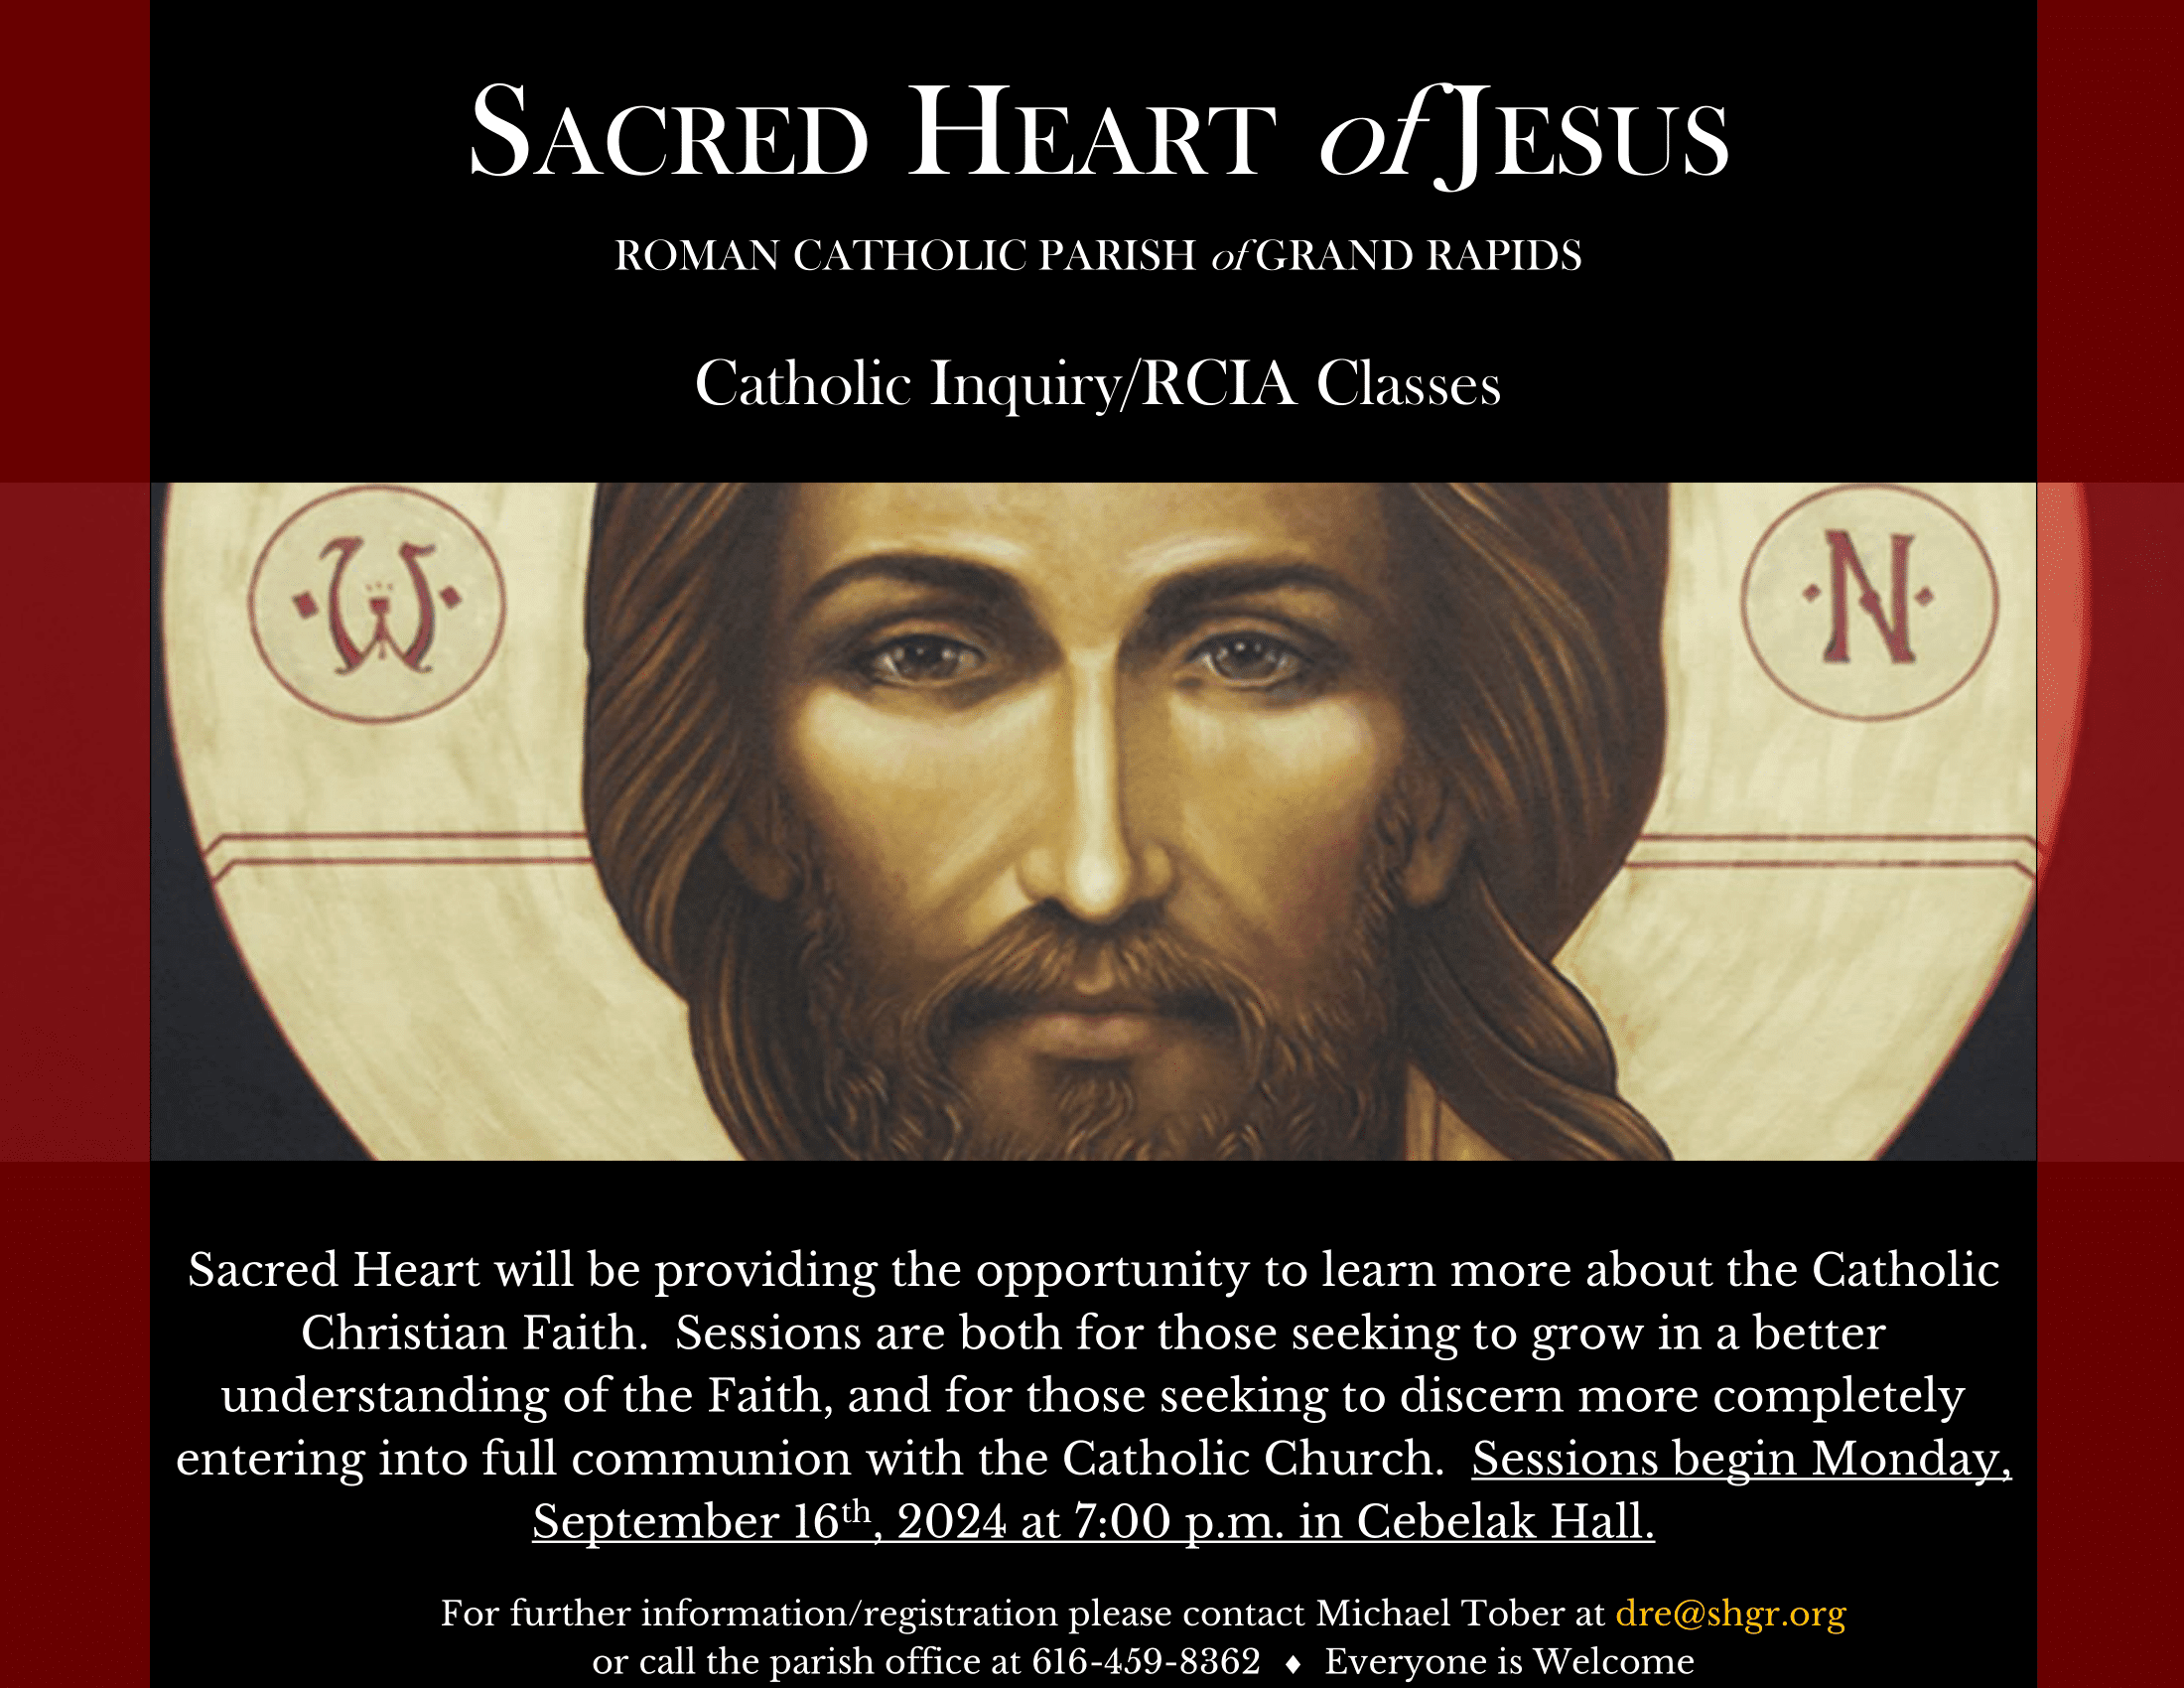 Catholic Inquiry/RCIA Classes at Sacred Heart